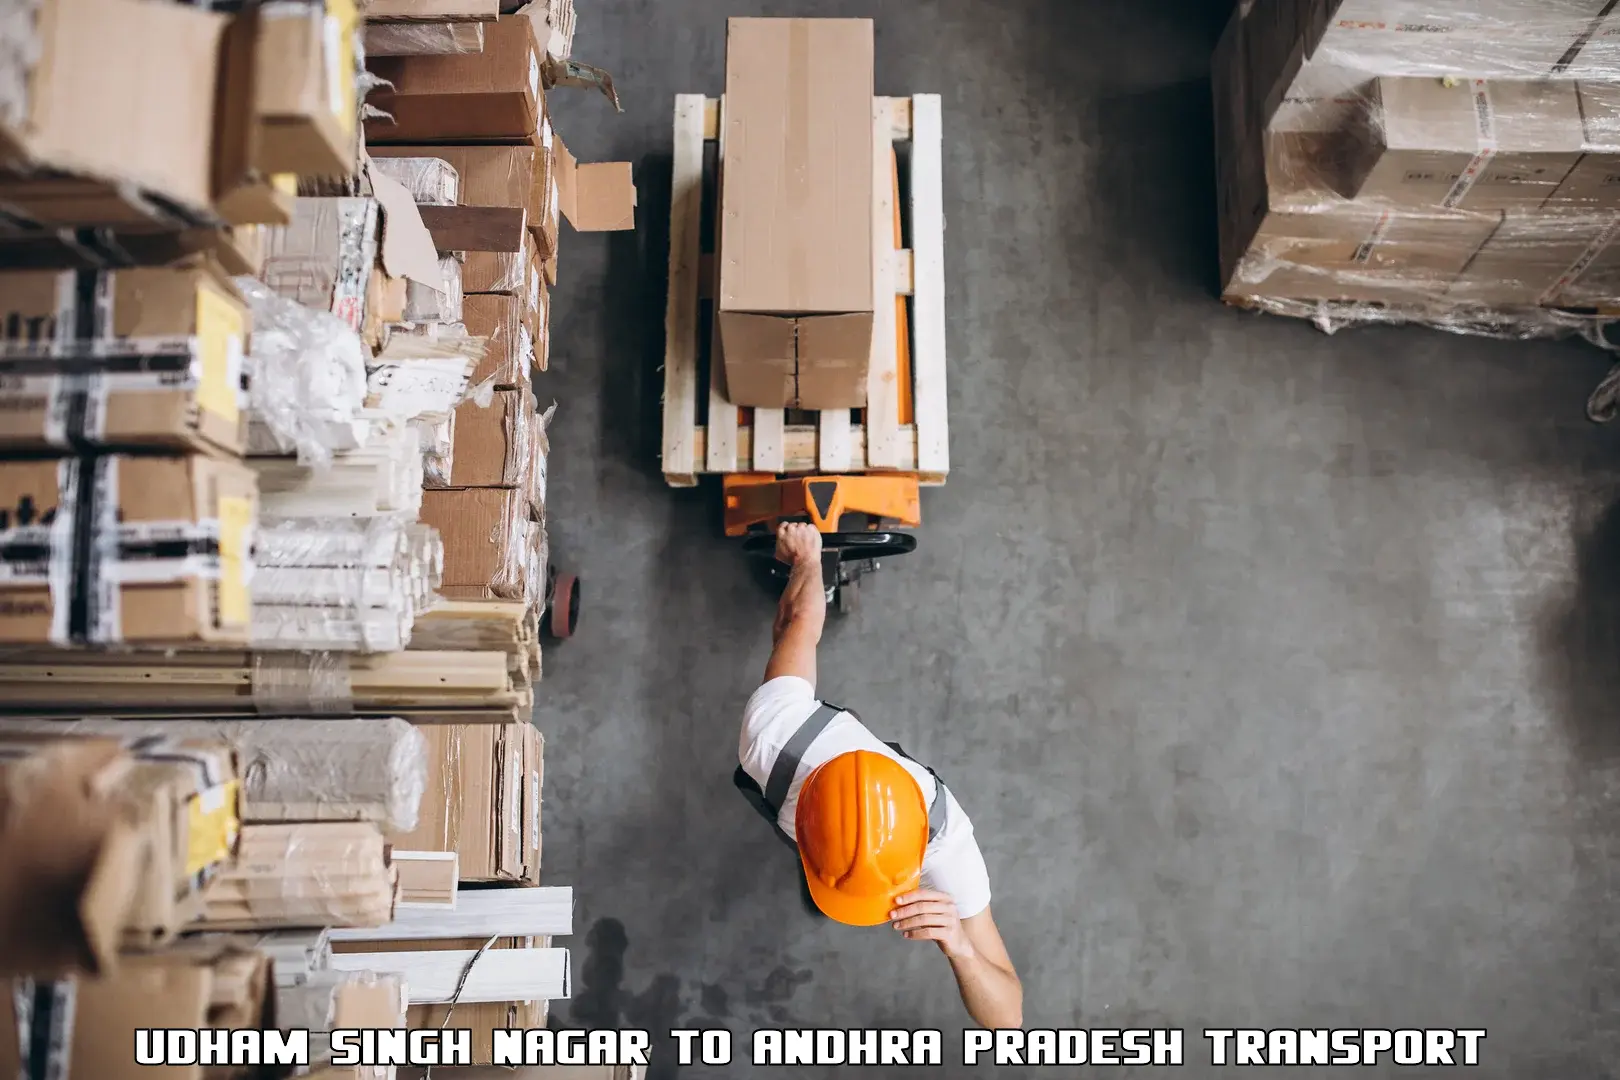 Shipping partner Udham Singh Nagar to Pakala